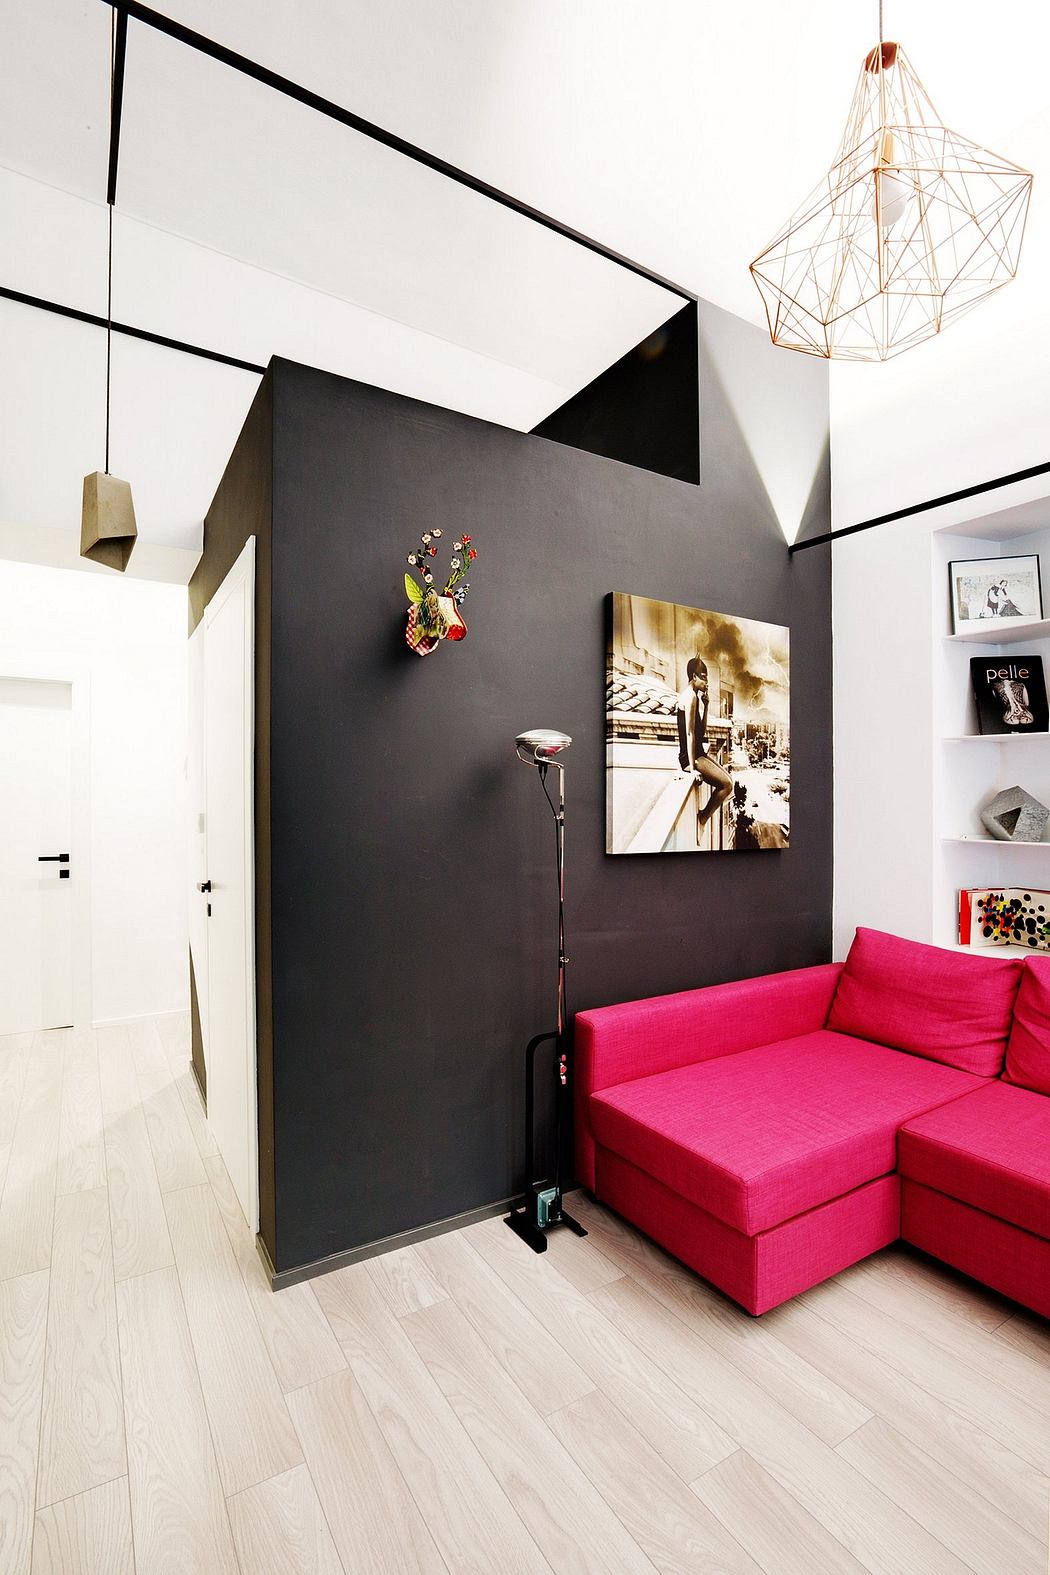 Sleek, modern interior with bold black walls, geometric lighting, and vibrant pink sofa.